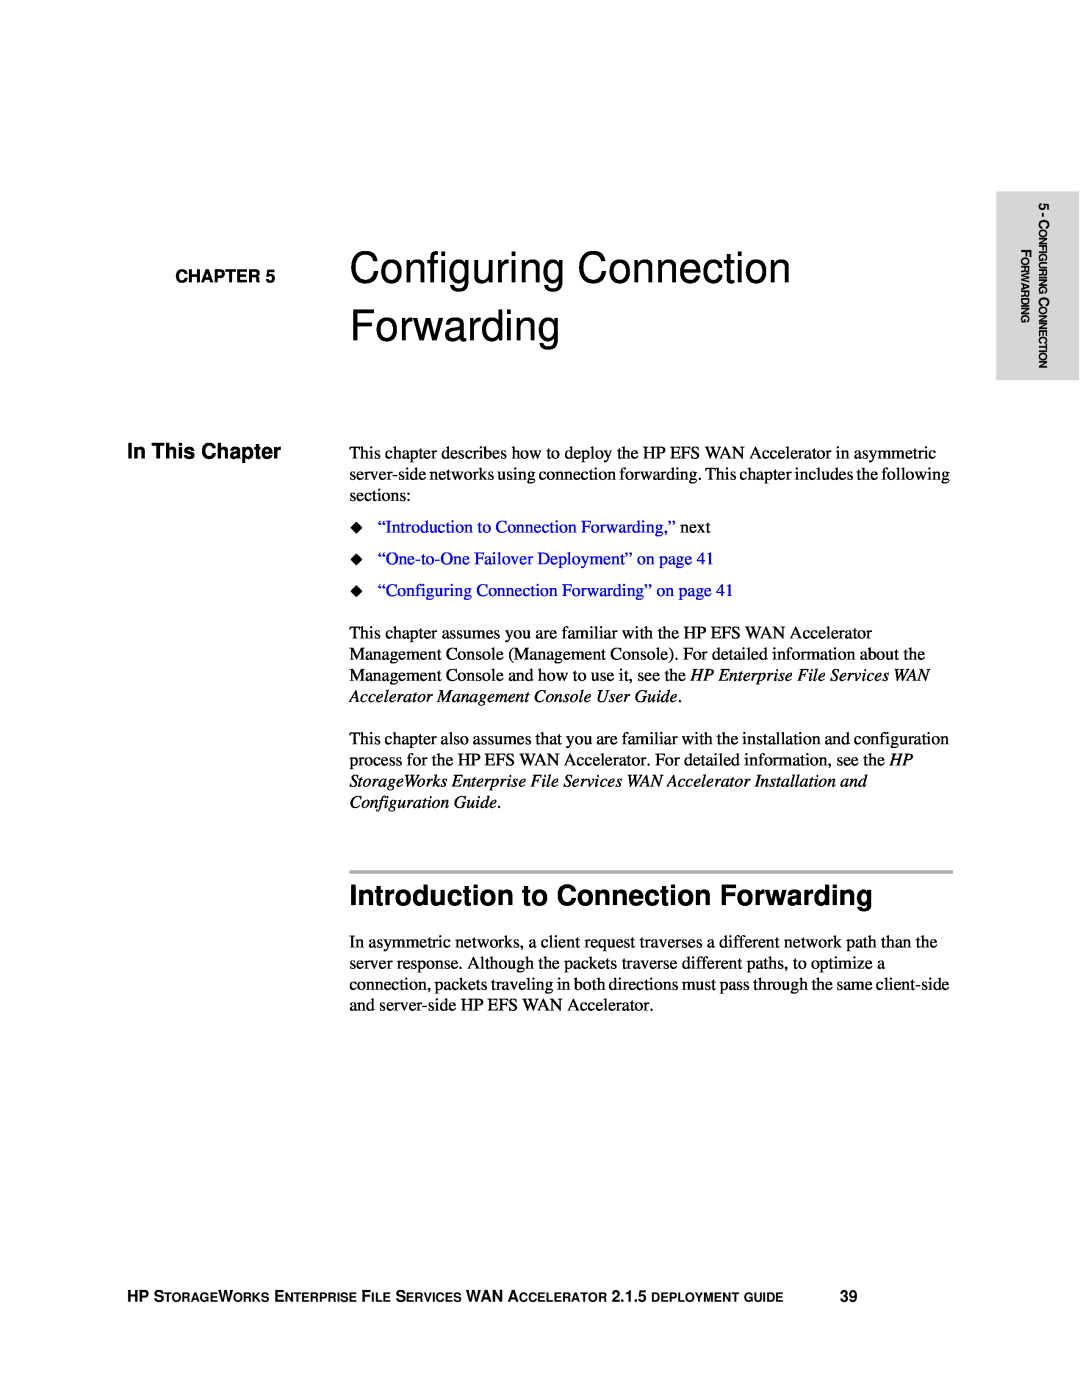 HP Enterprise File Services WAN Accelerator manual Configuring Connection Forwarding, Introduction to Connection Forwarding 